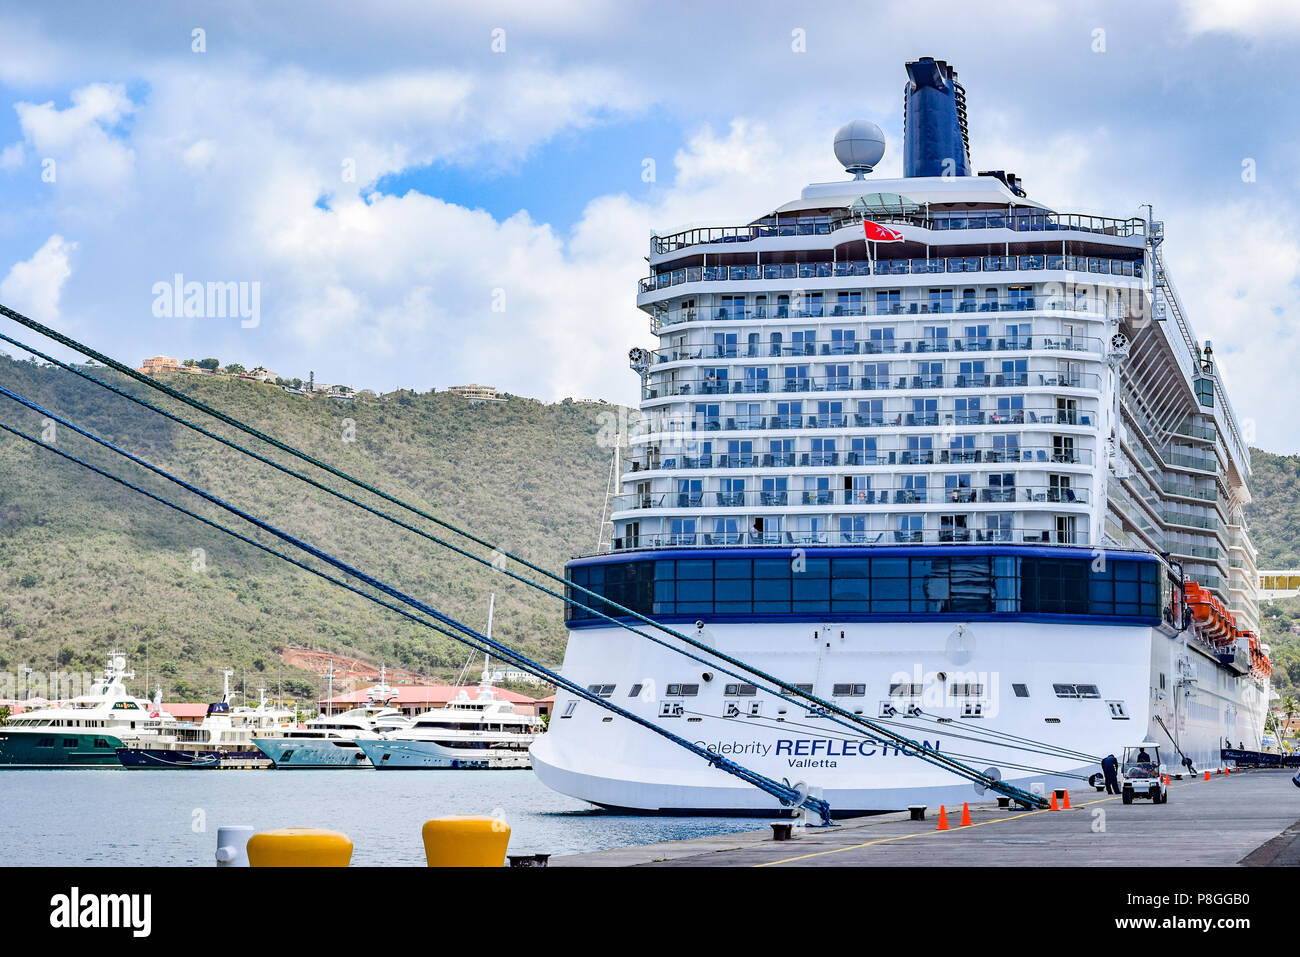 Saint Thomas, US Virgin Islands - April 01 2014: Celebrity Reflection Cruise Ship docked in the Saint Thomas Cruise Ship Port Terminal Stock Photo